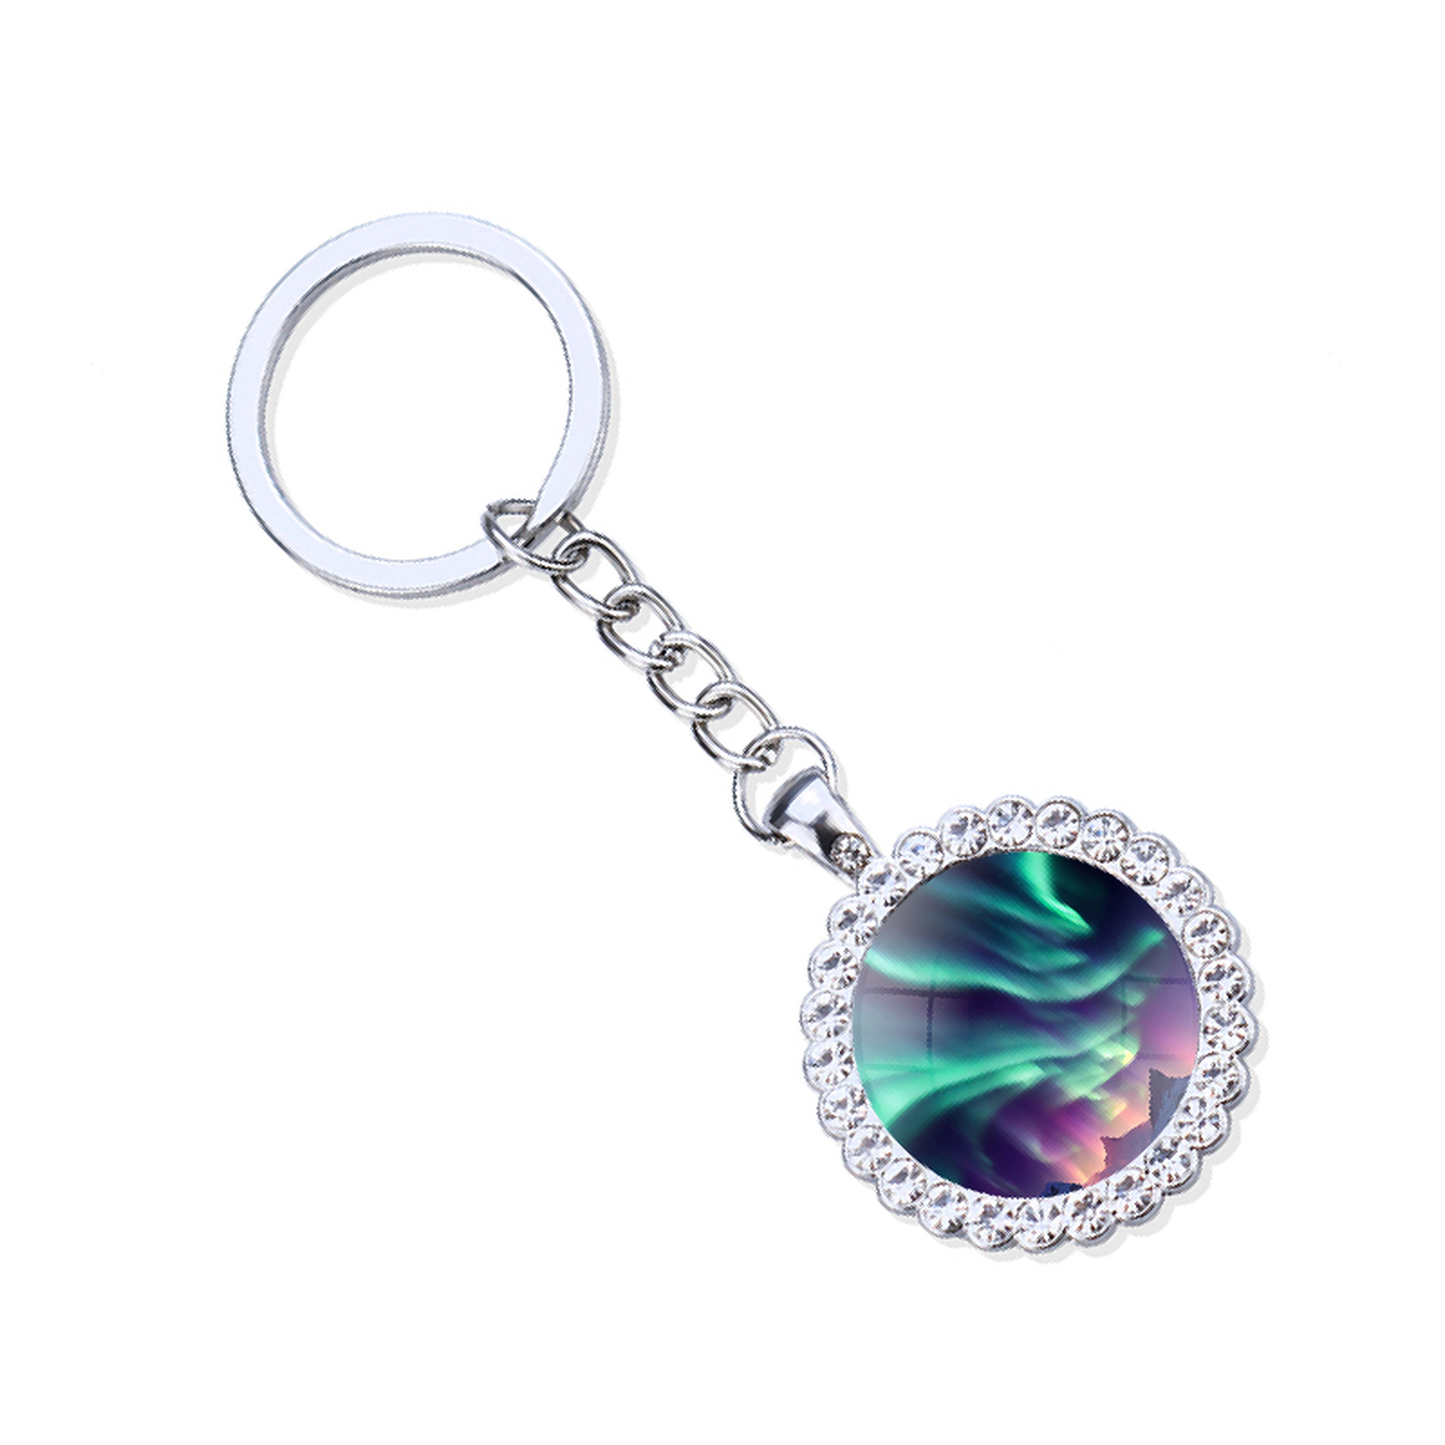 Aurora Borealis Silver Keyring - Northern Light Jewelry - Rhinestones Glass Key Chain - Perfect Aurora Lovers Gift 1